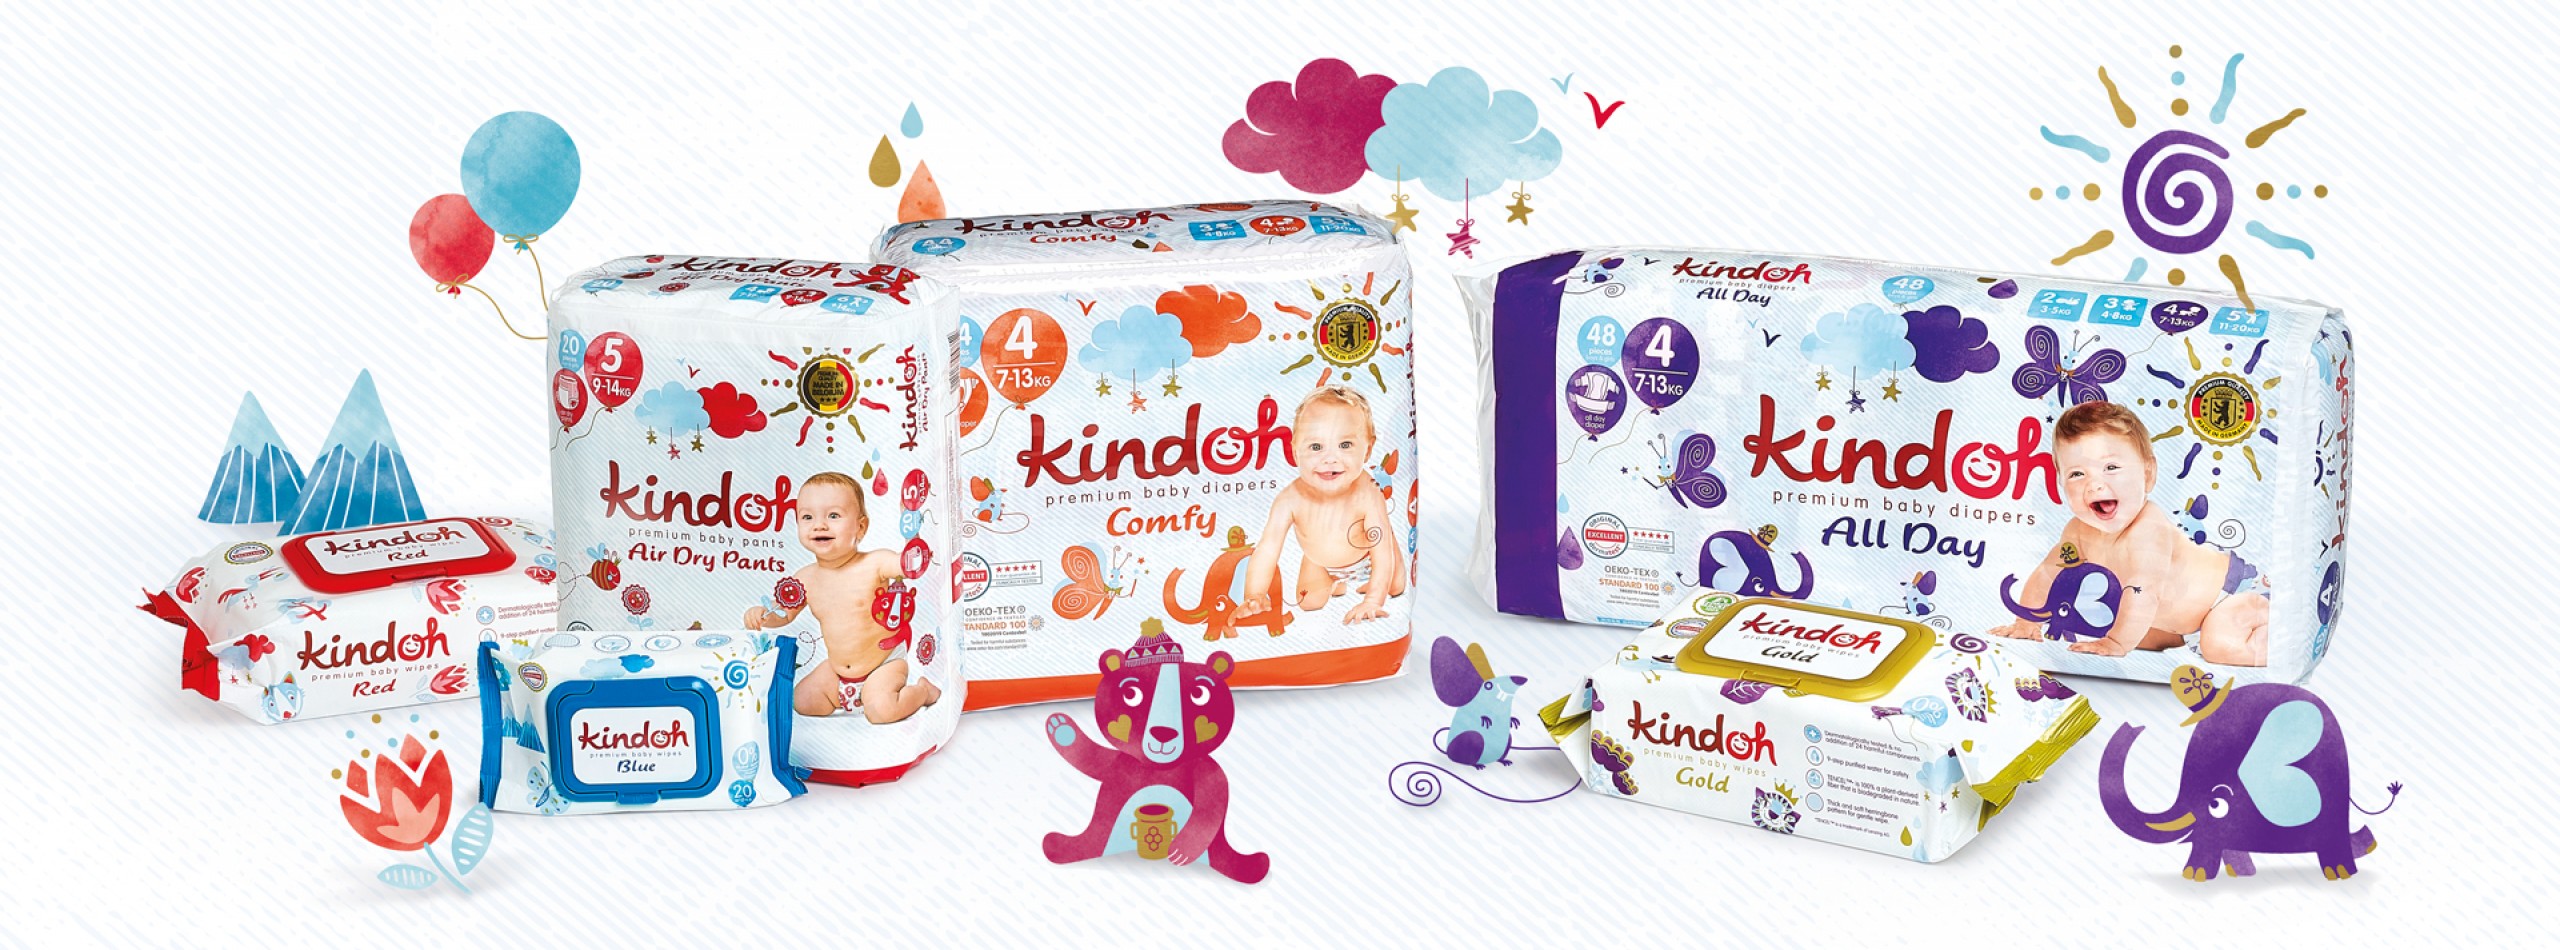 Quatre Mains package design - Package design Kindoh, rebranding, quatre mains, diapers